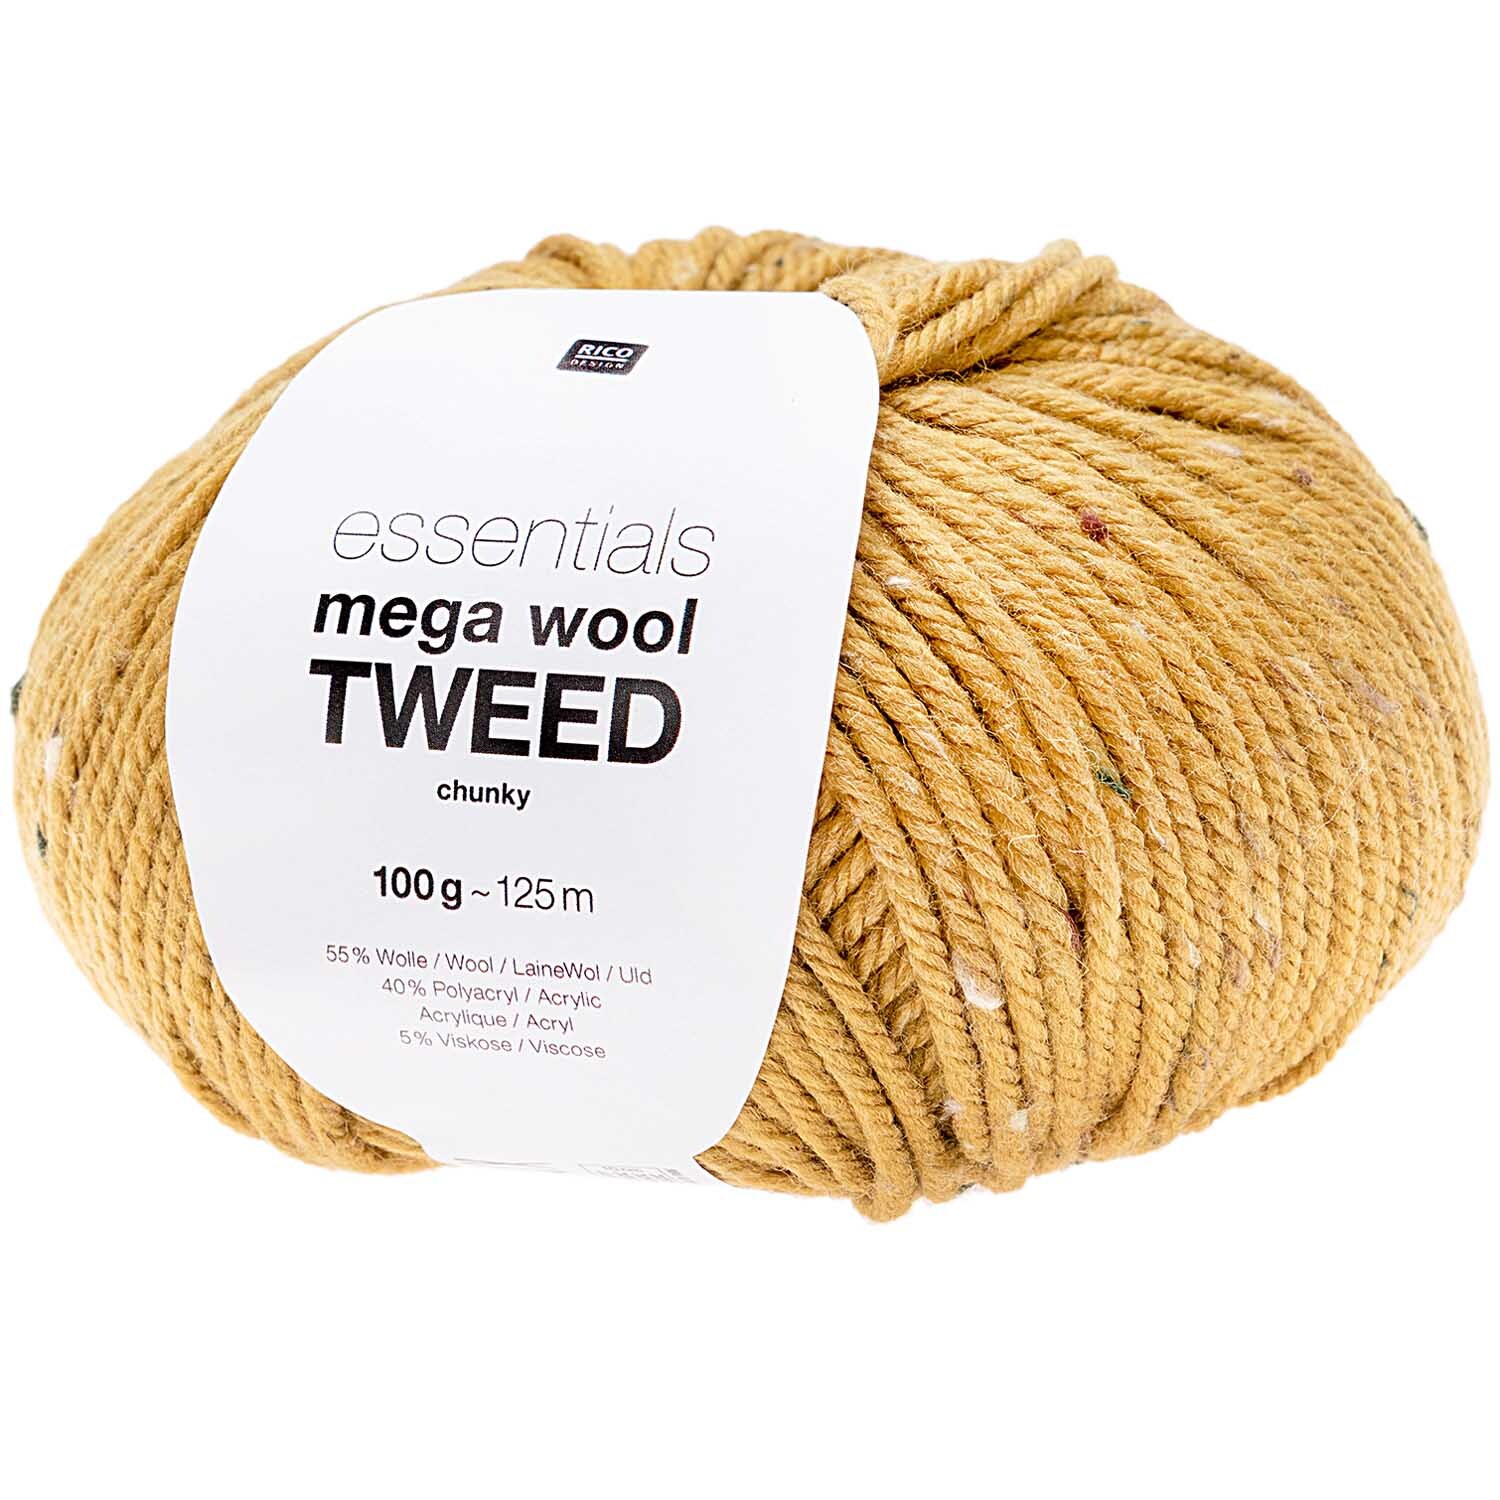 Essentials Mega Wool Tweed chunky